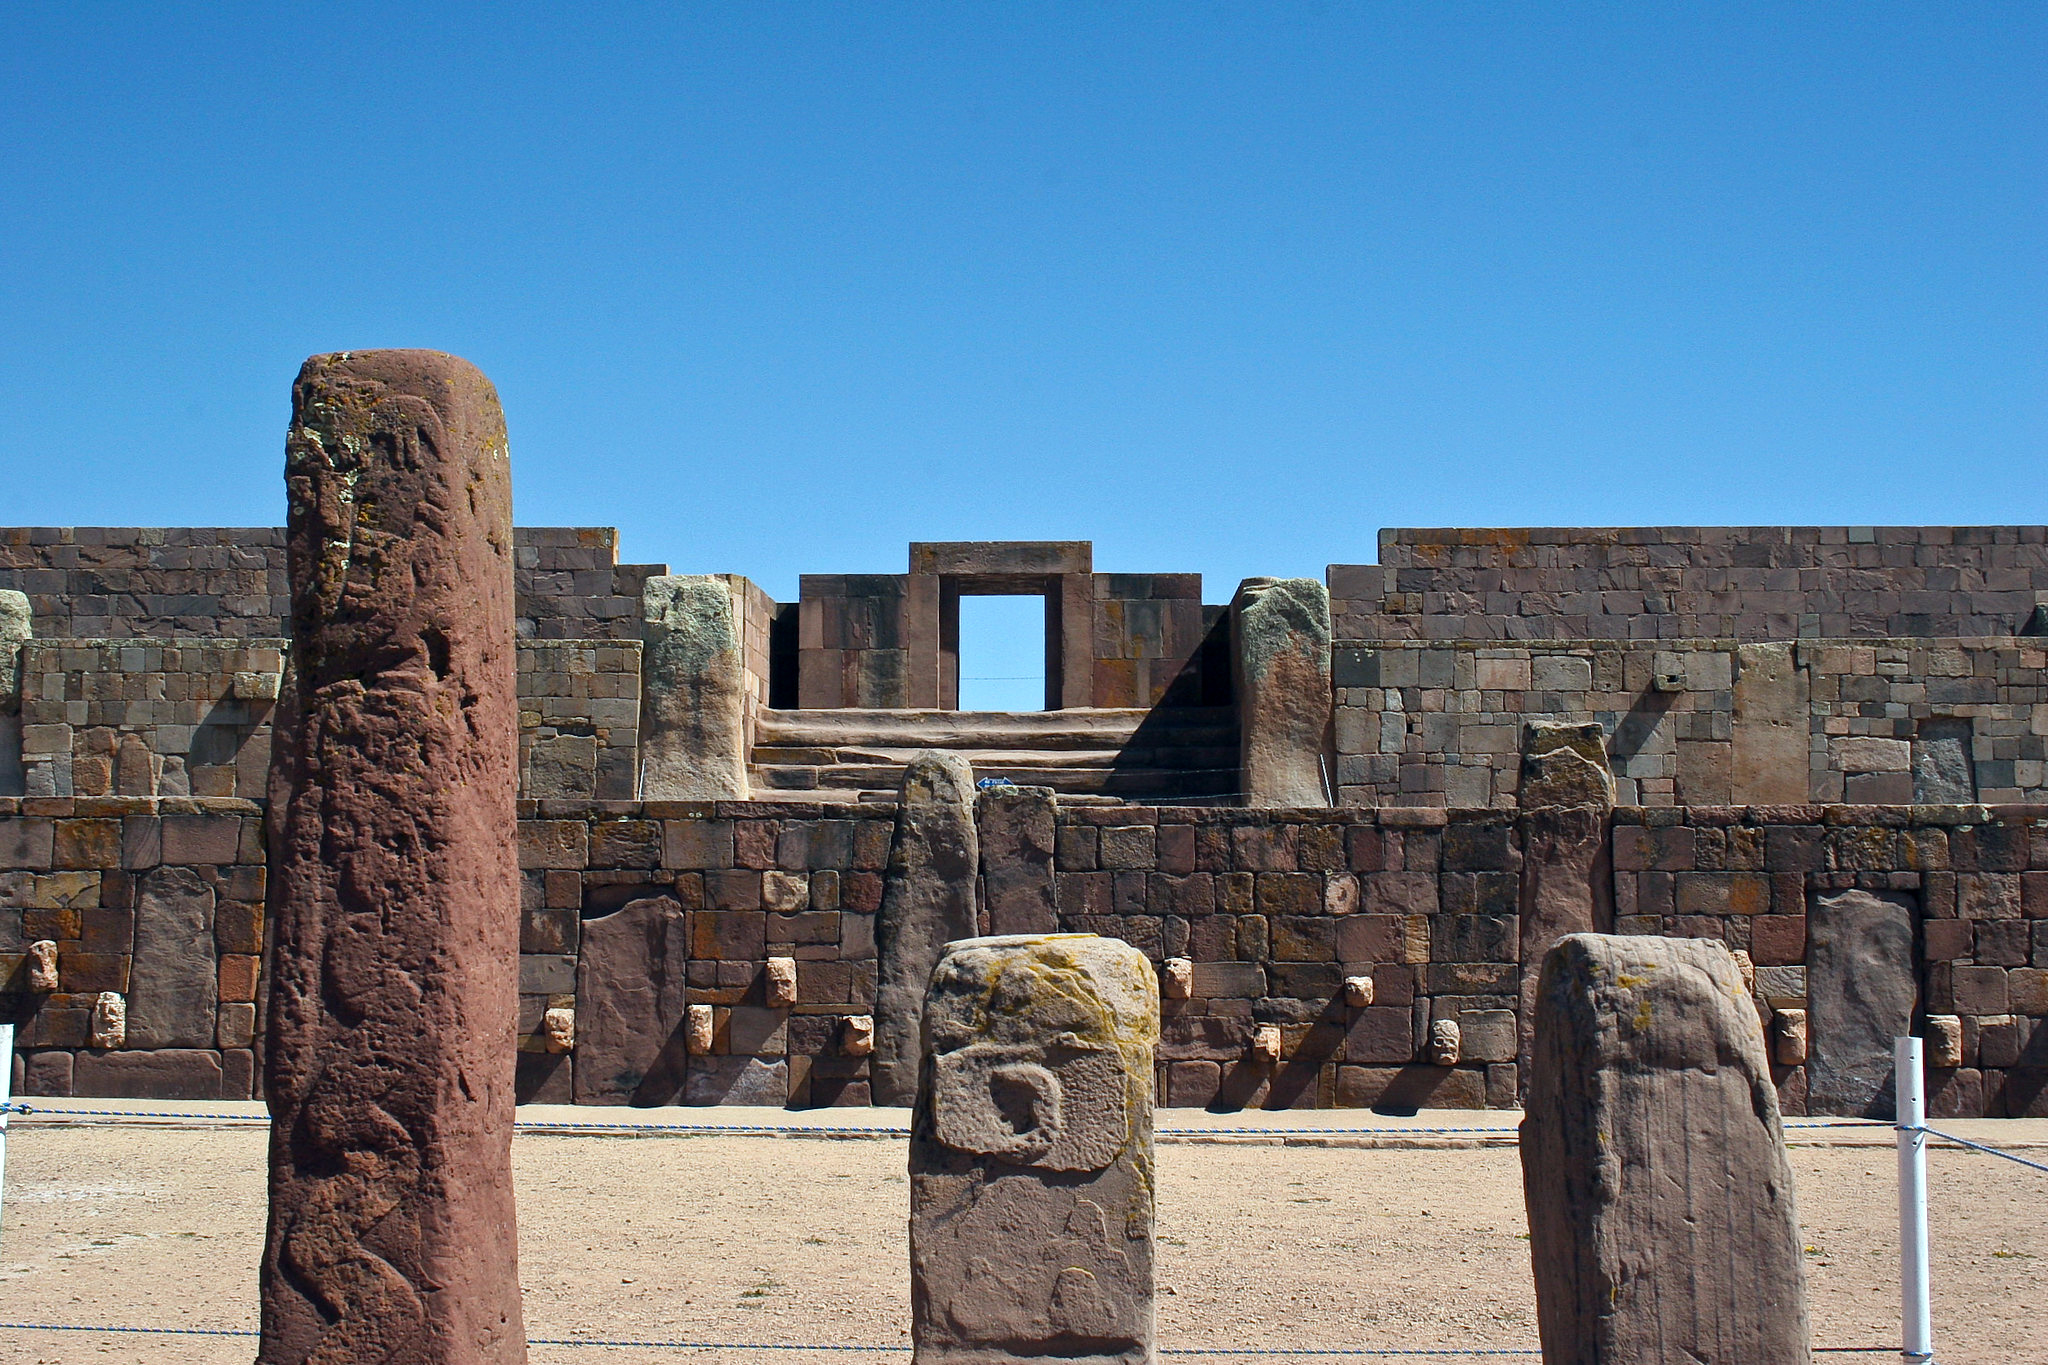 View from the Semi-subterranean Court, Tiwanaku, 300–400 CE (photo: Danielle Pereira, CC BY 2.0)